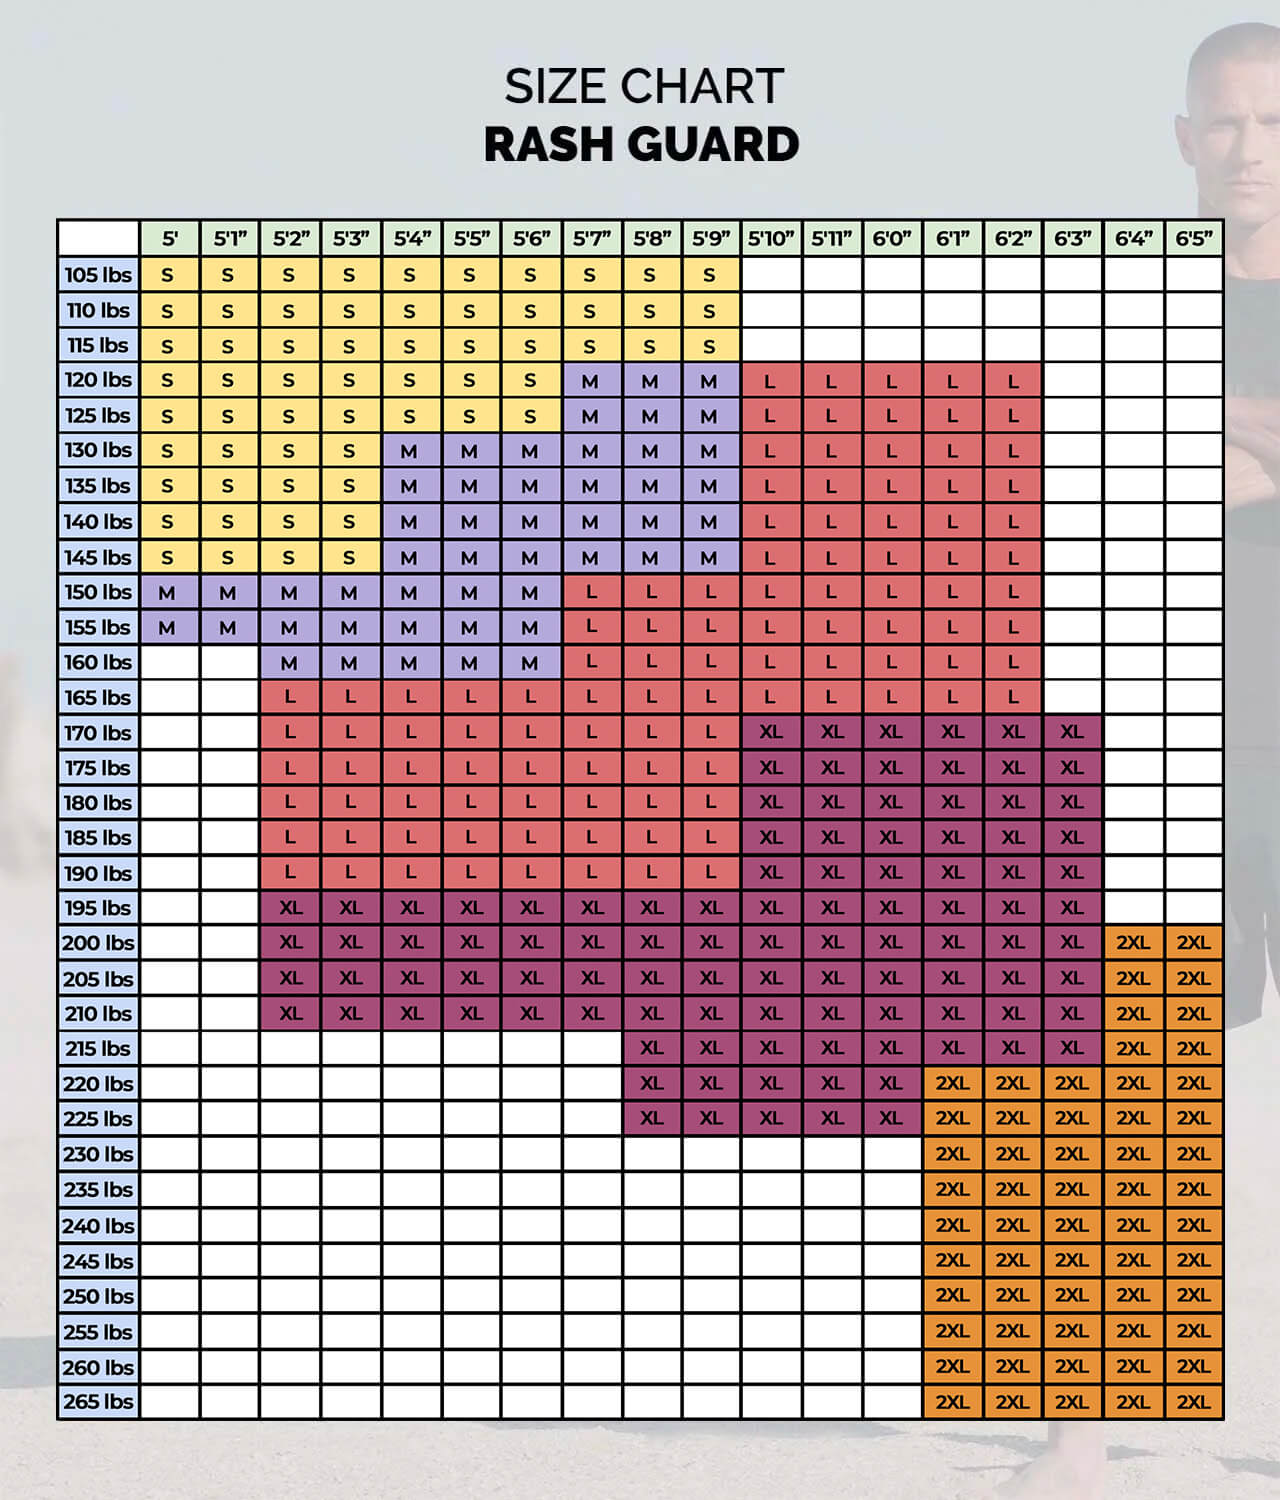 Elite Sports Men's Standard Black Short Sleeve Jiu Jitsu BJJ Rash Guard Size Guide